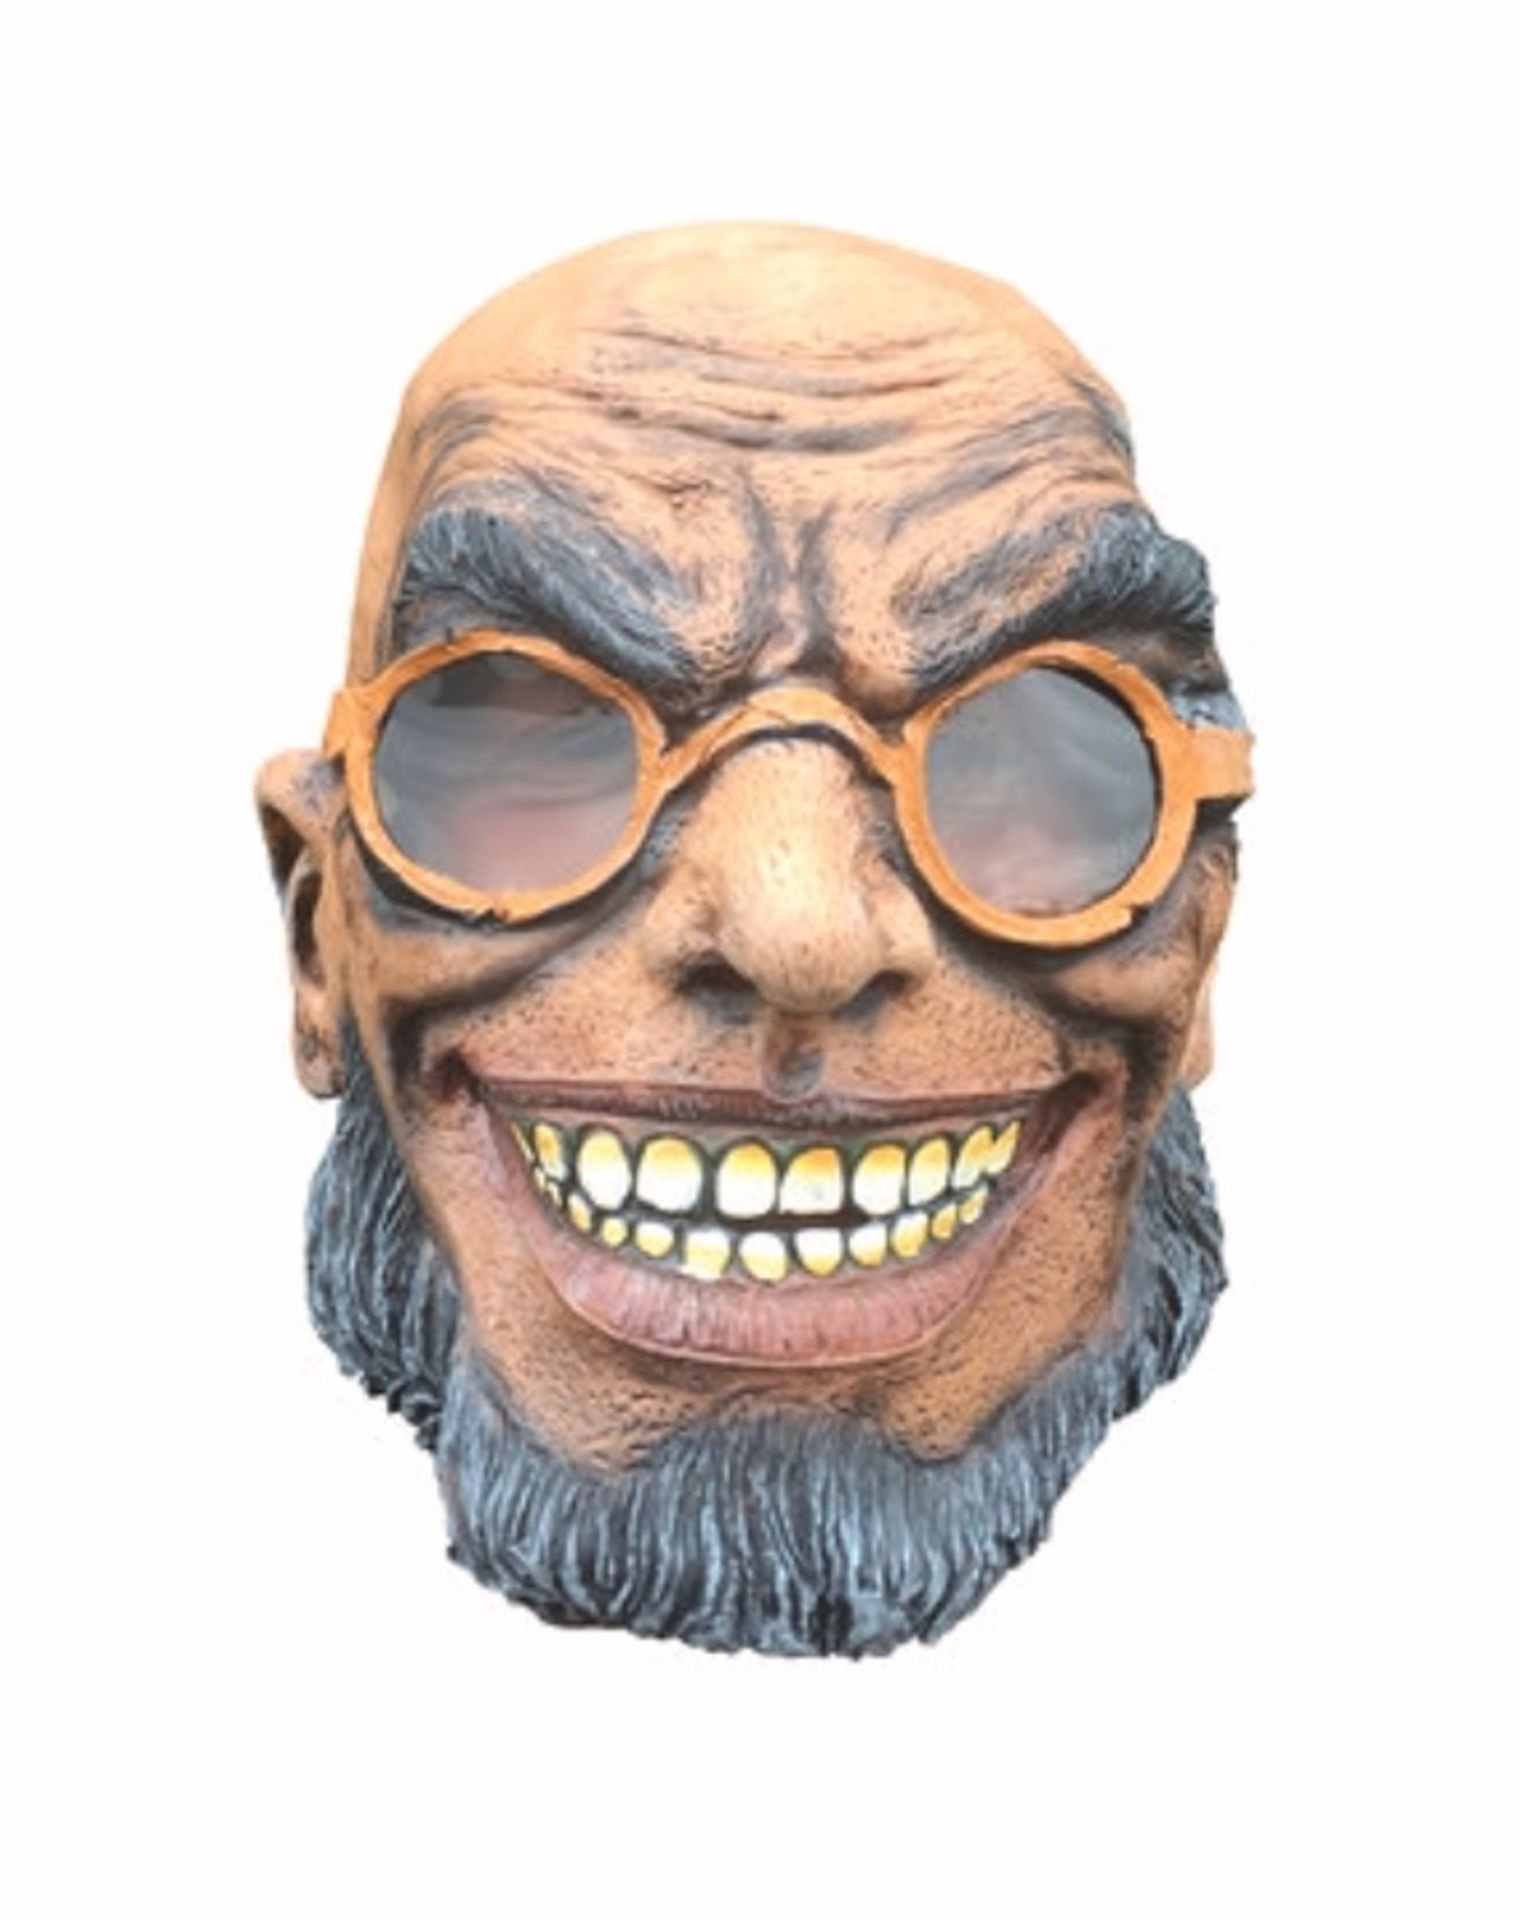 Job lot of 100 Latex Halloween Full Head Masks - New Liquidated Stock - Image 9 of 10